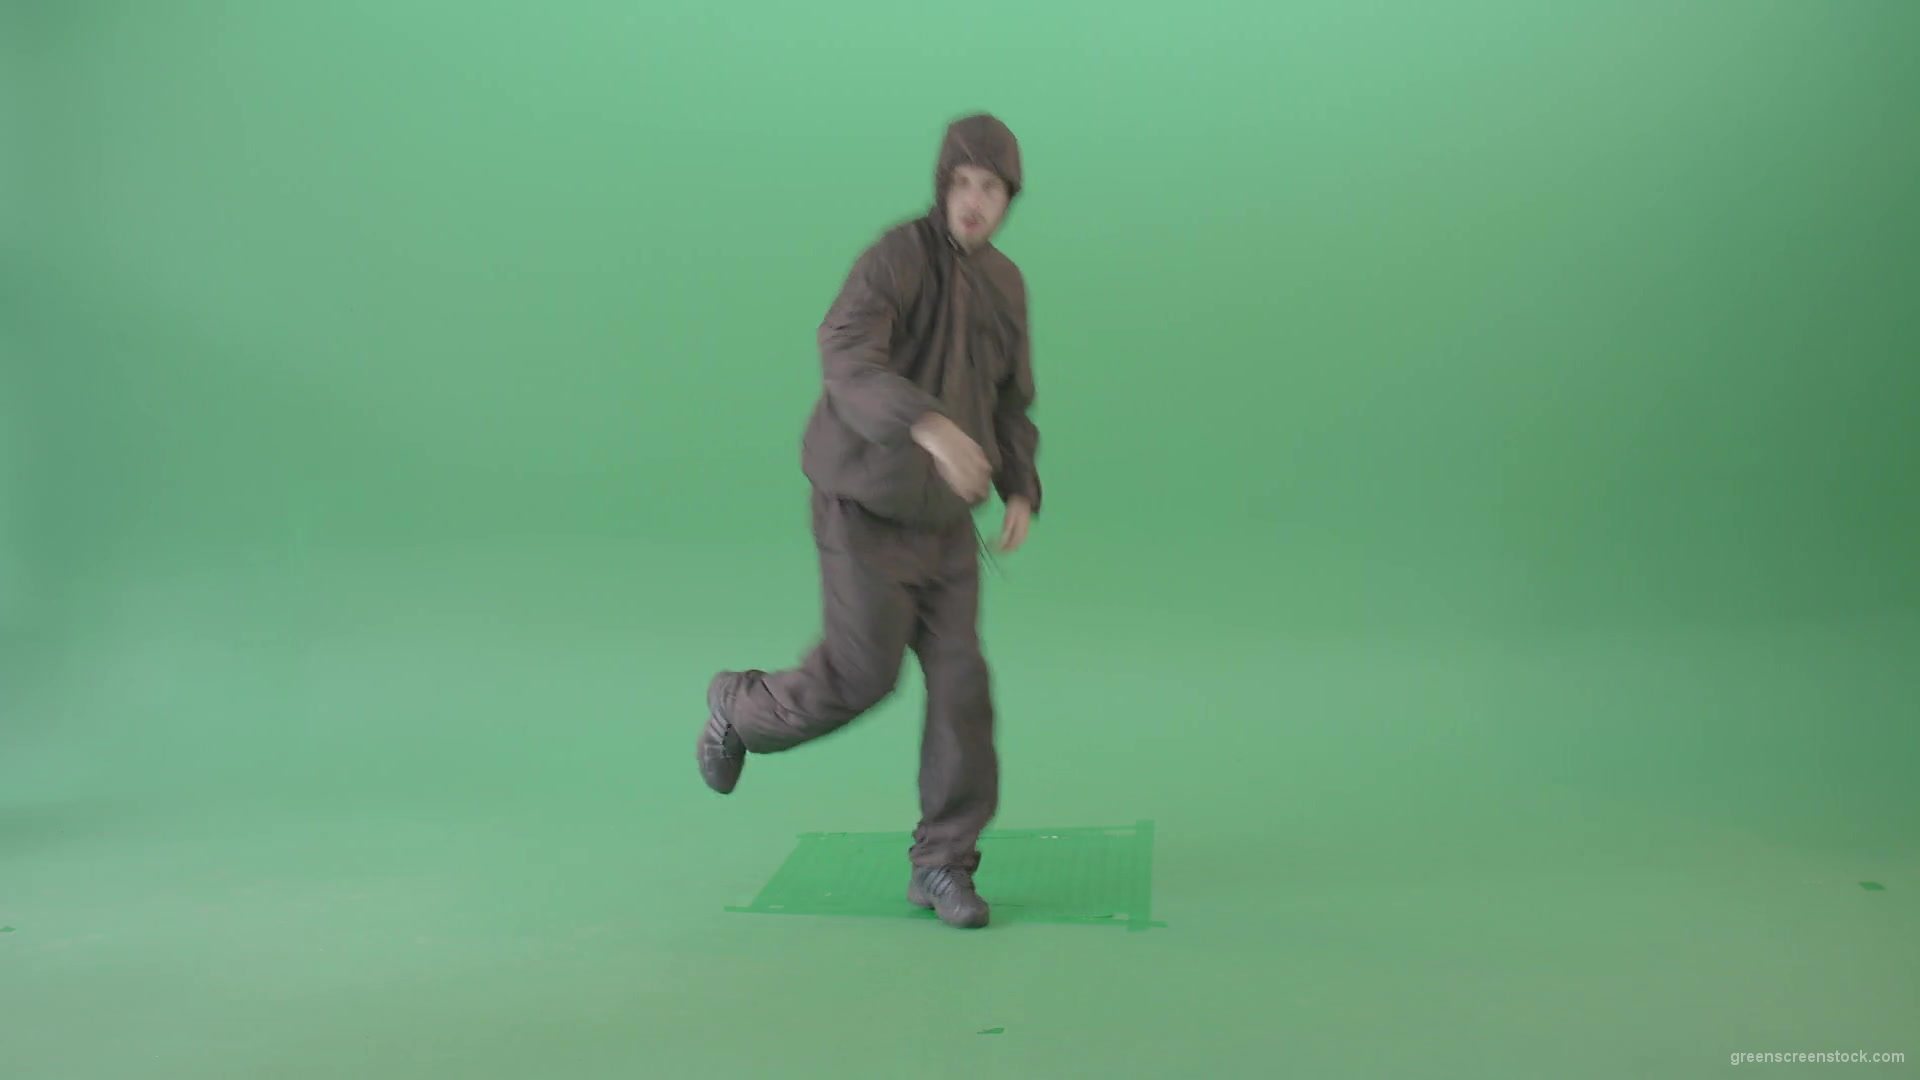 vj video background Breakdancer-making-power-move-spinning-on-head-dancing-in-green-screen-studio-4K-Video-Footage-1920_003